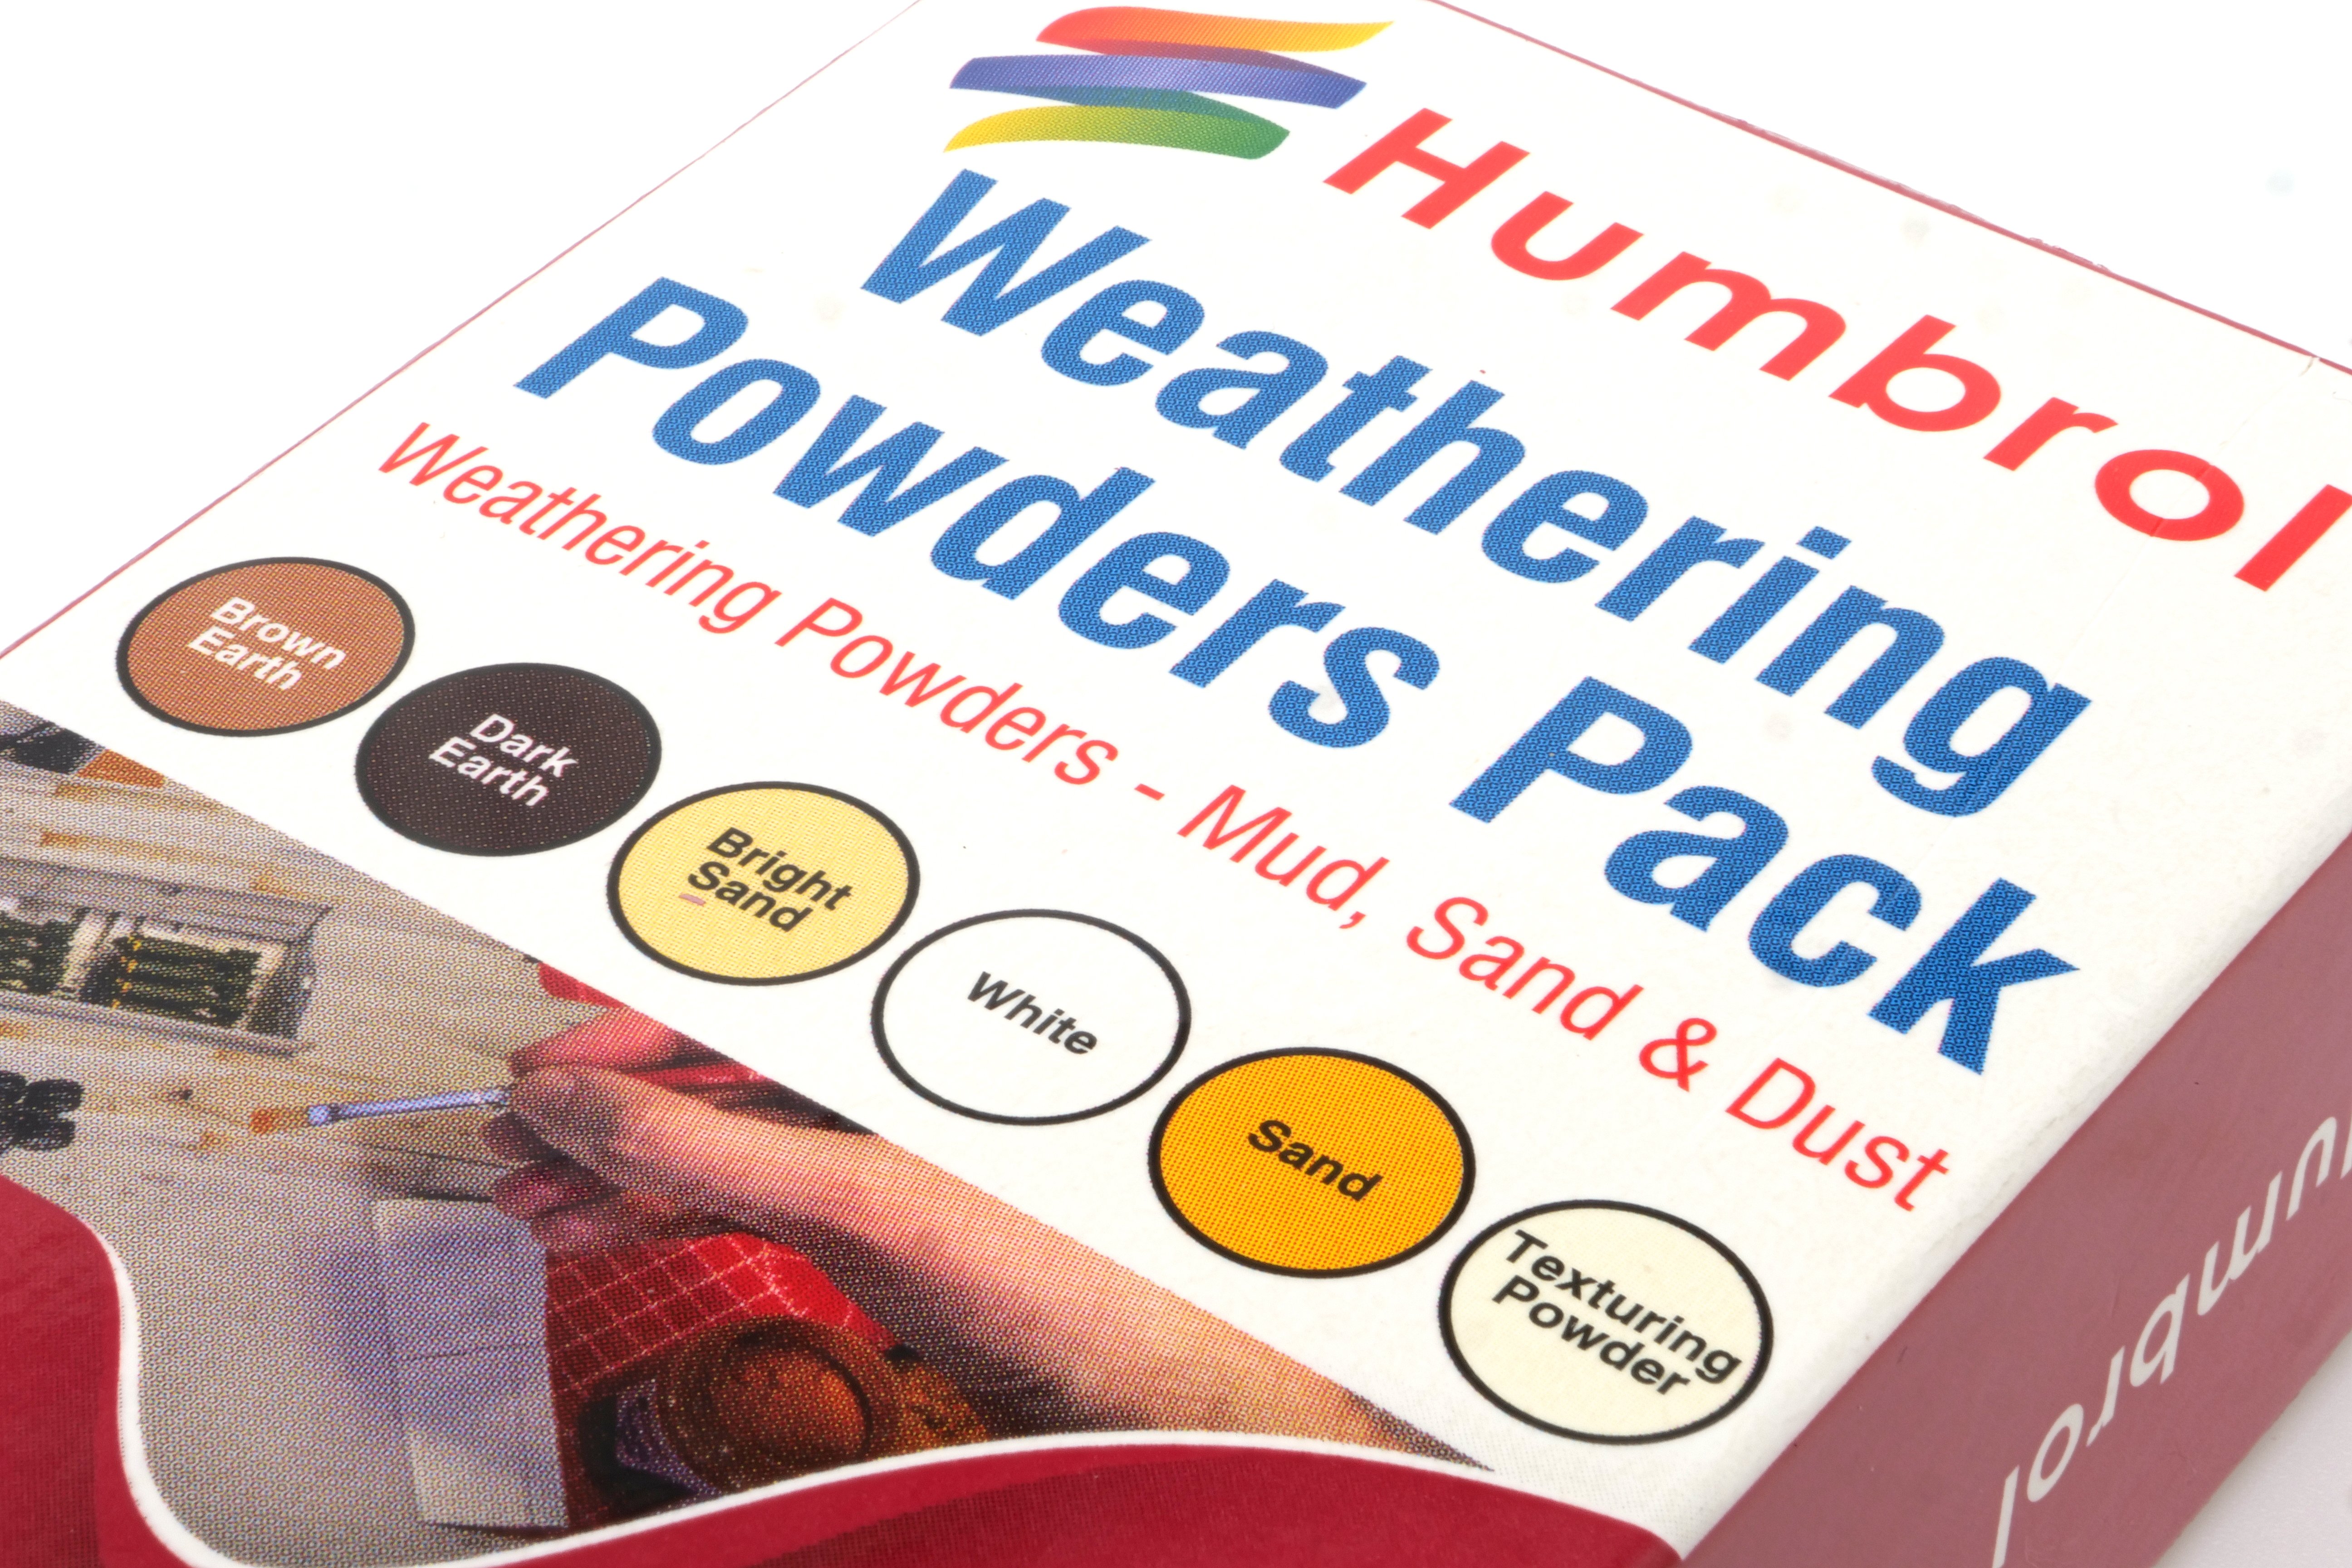 Humbrol weathering packs